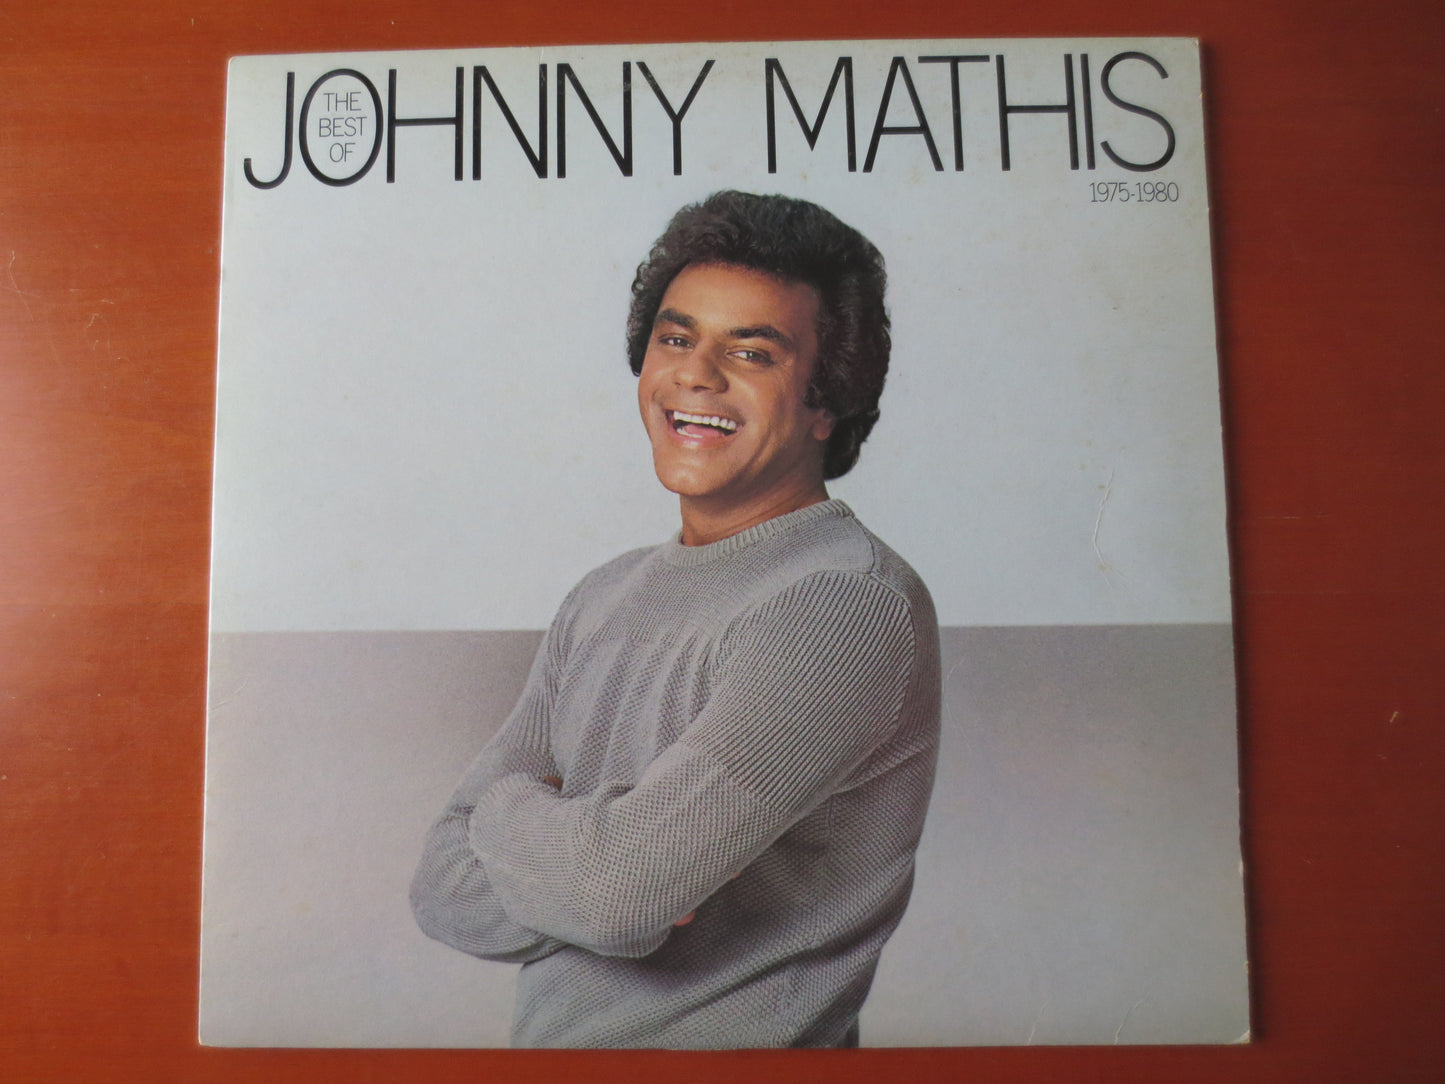 JOHNNY MATHIS, BEST of Lp, Johnny Mathis Album, Johnny Mathis Vinyl, Johnny Mathis Lp, Vintage Vinyl, 1980 Records